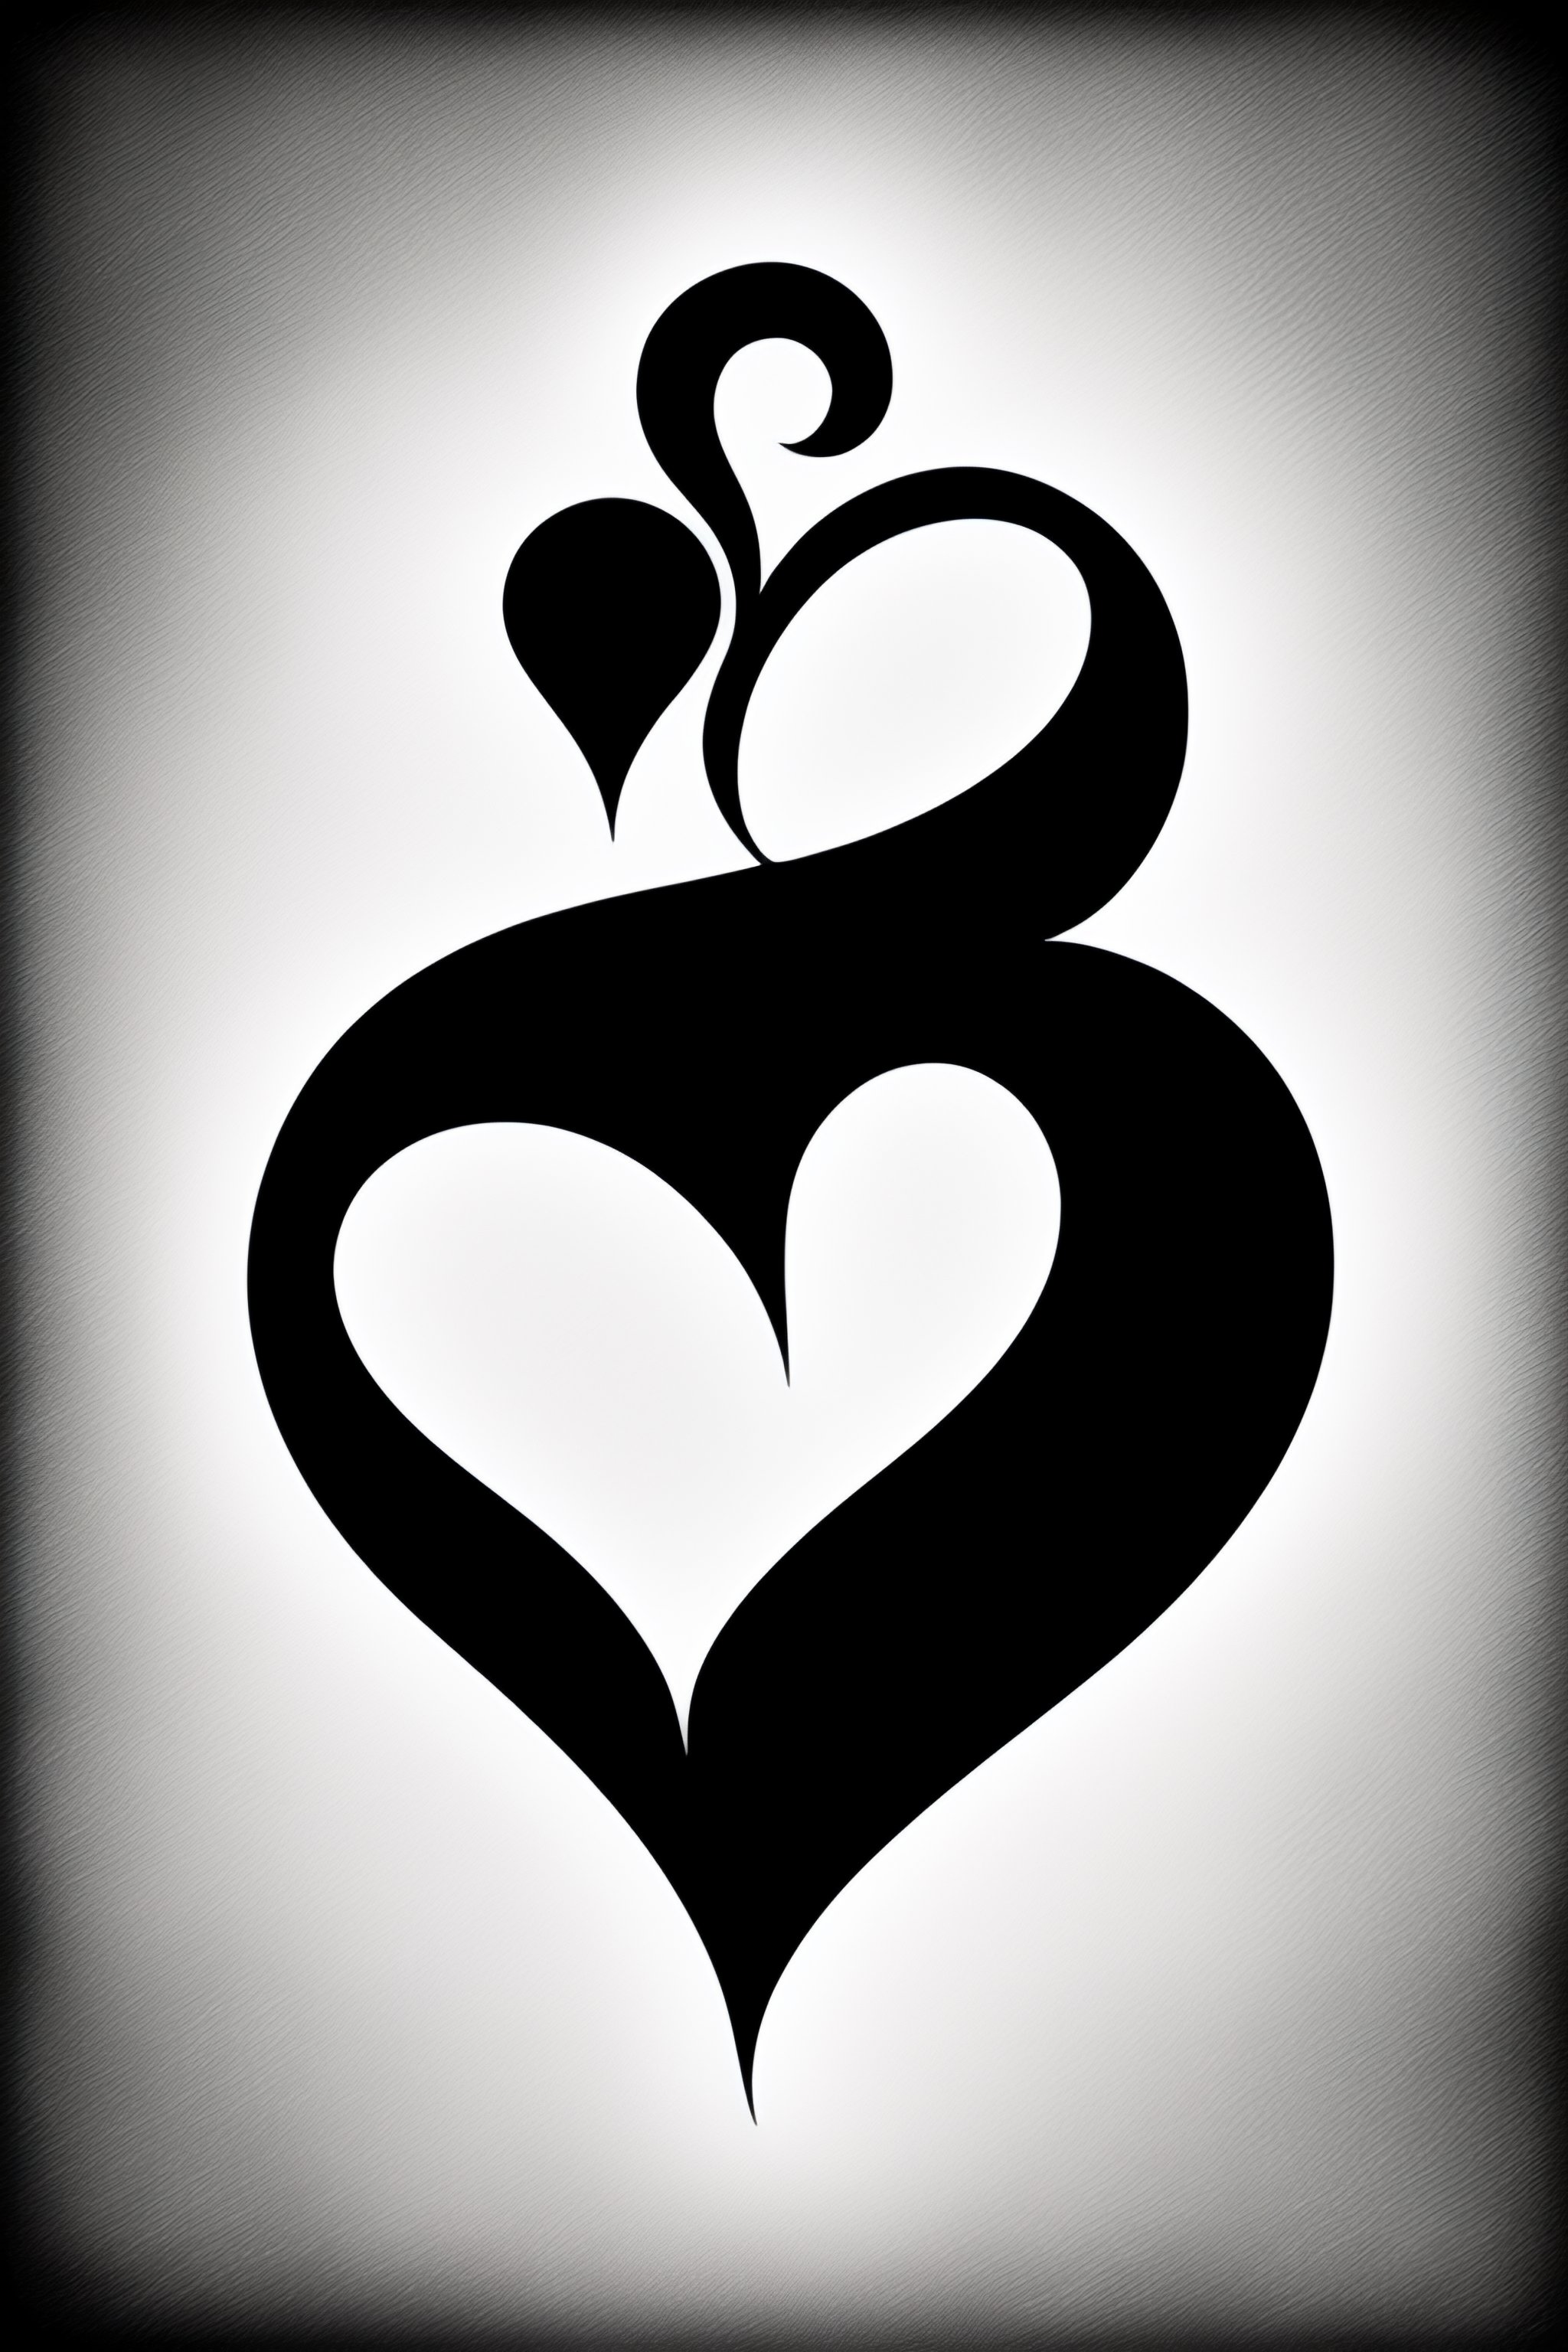 simple black heart tattoo